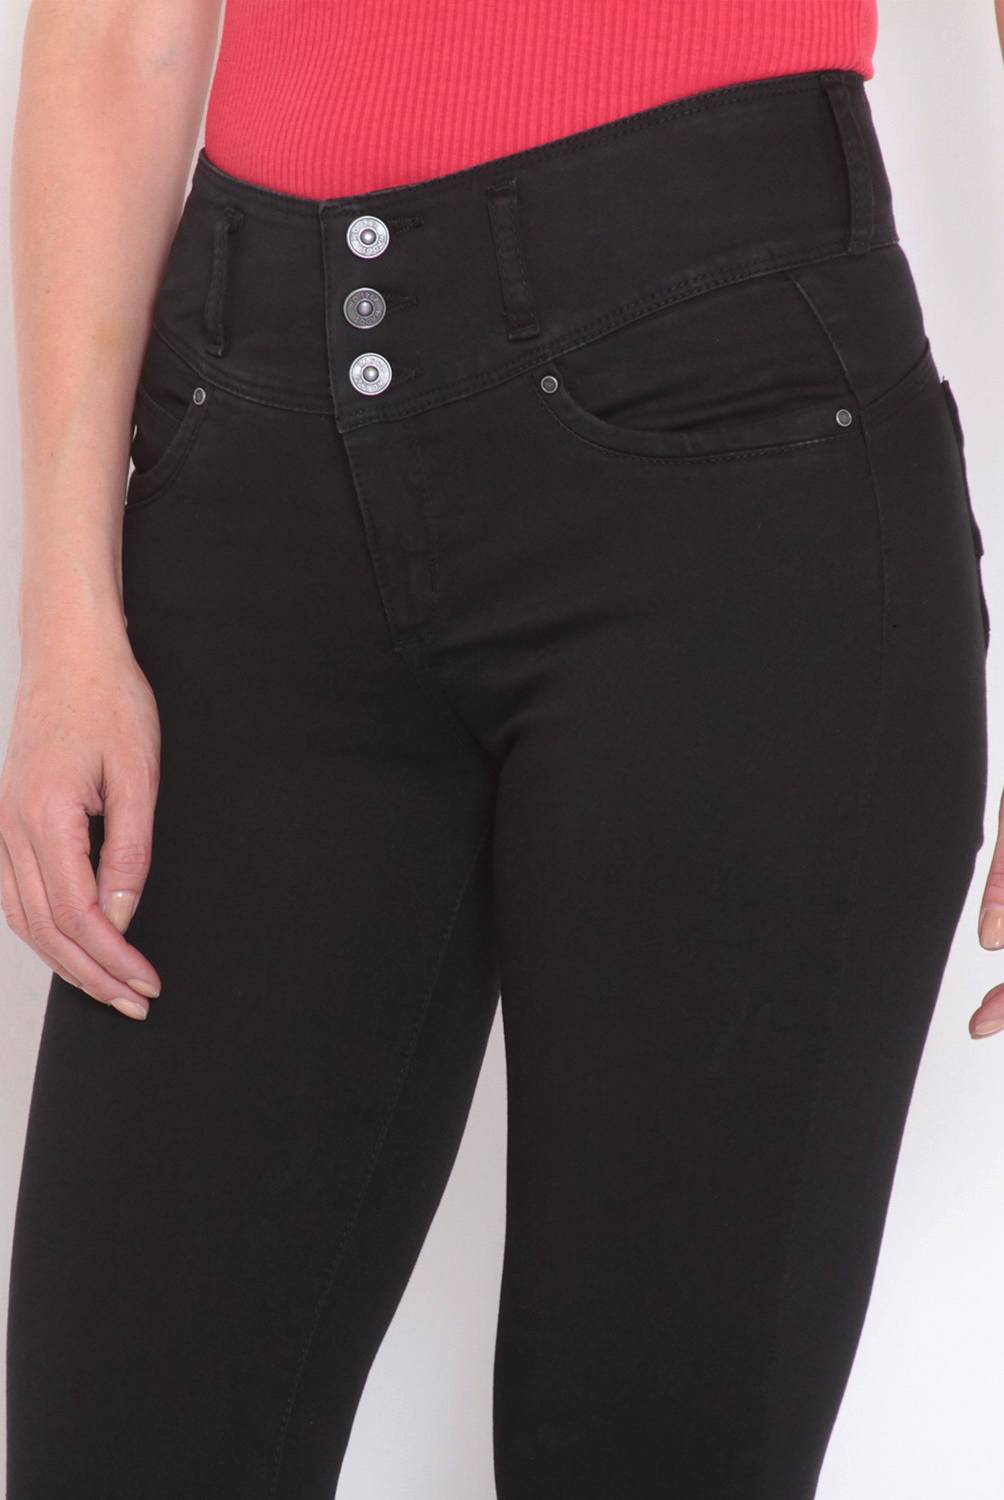 WADOS - Jeans Mujer Skinny Tiro Alto Algodón Wados